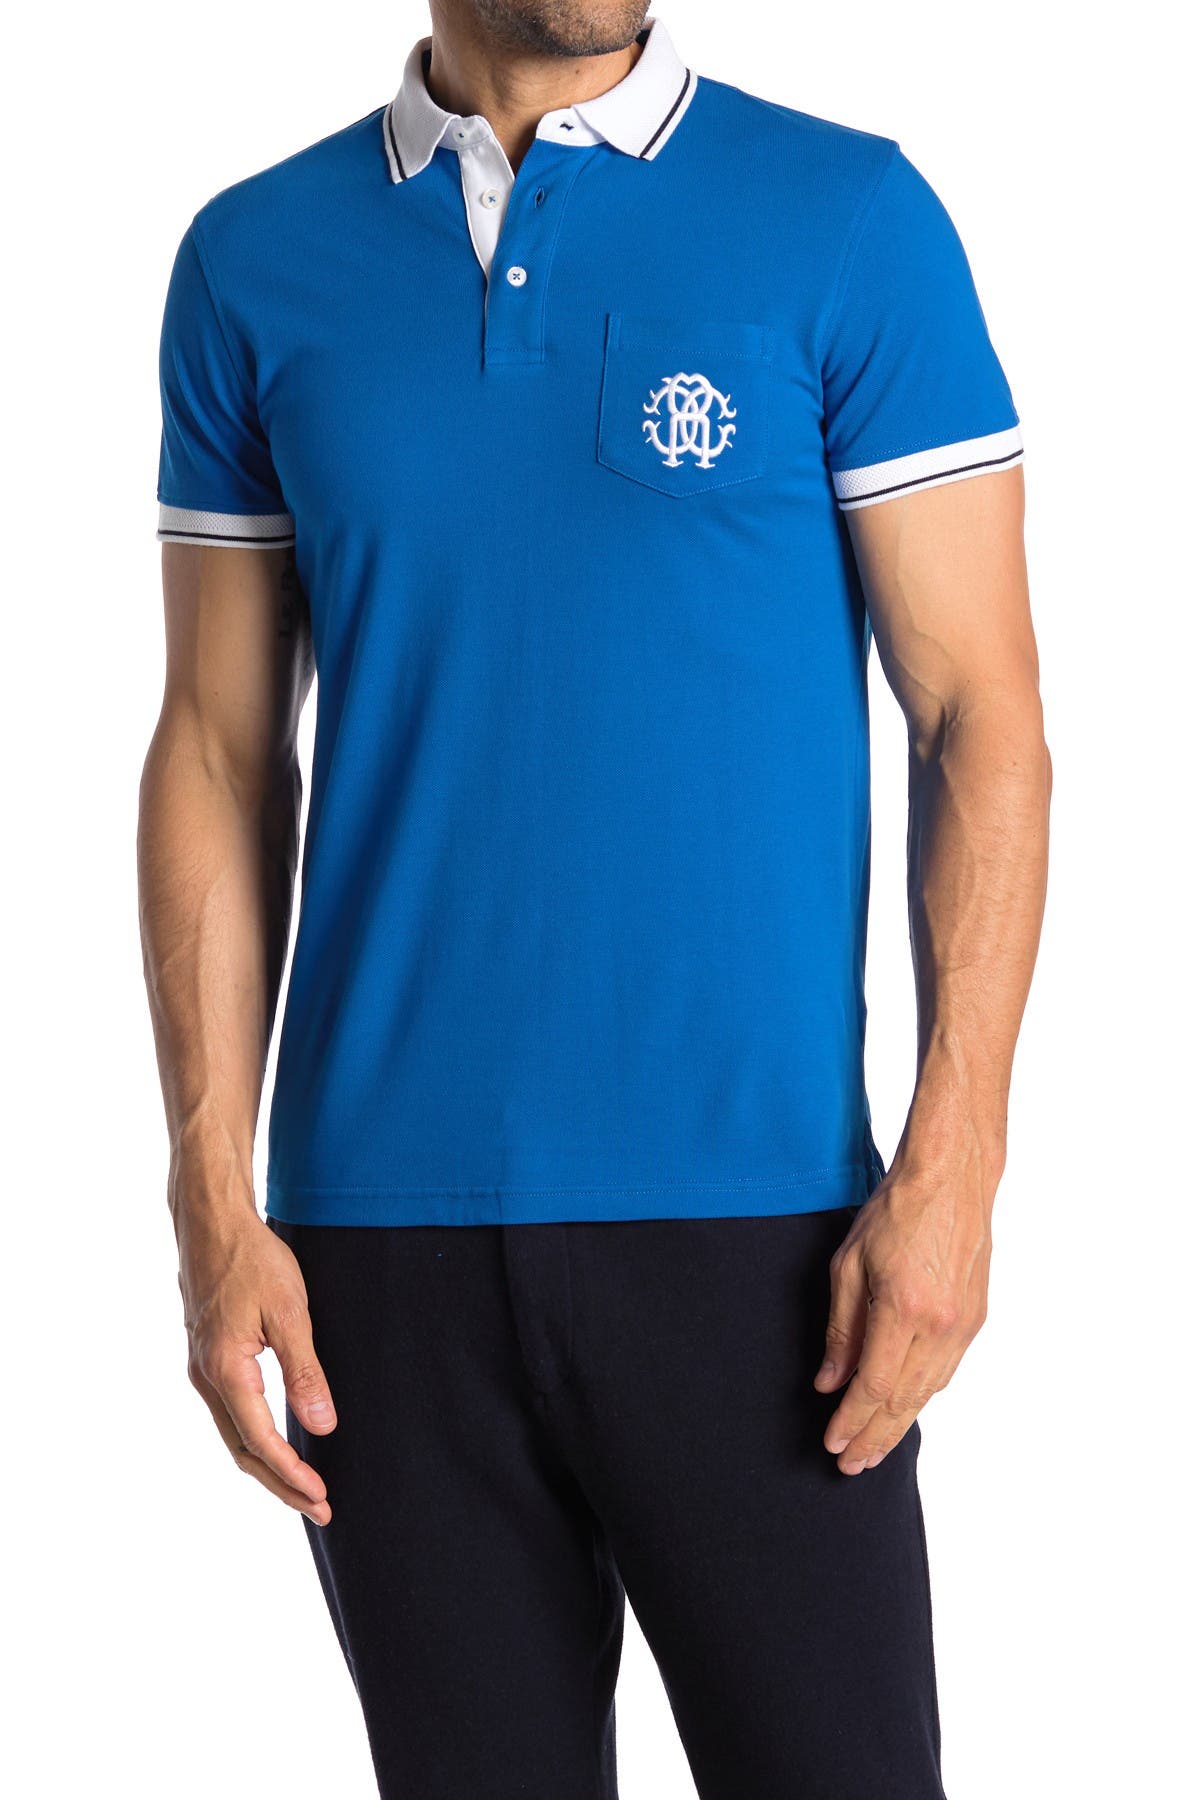 Roberto Cavalli Men's Blue Short Sleeve Polo Shirt Size S M L XL  2XL